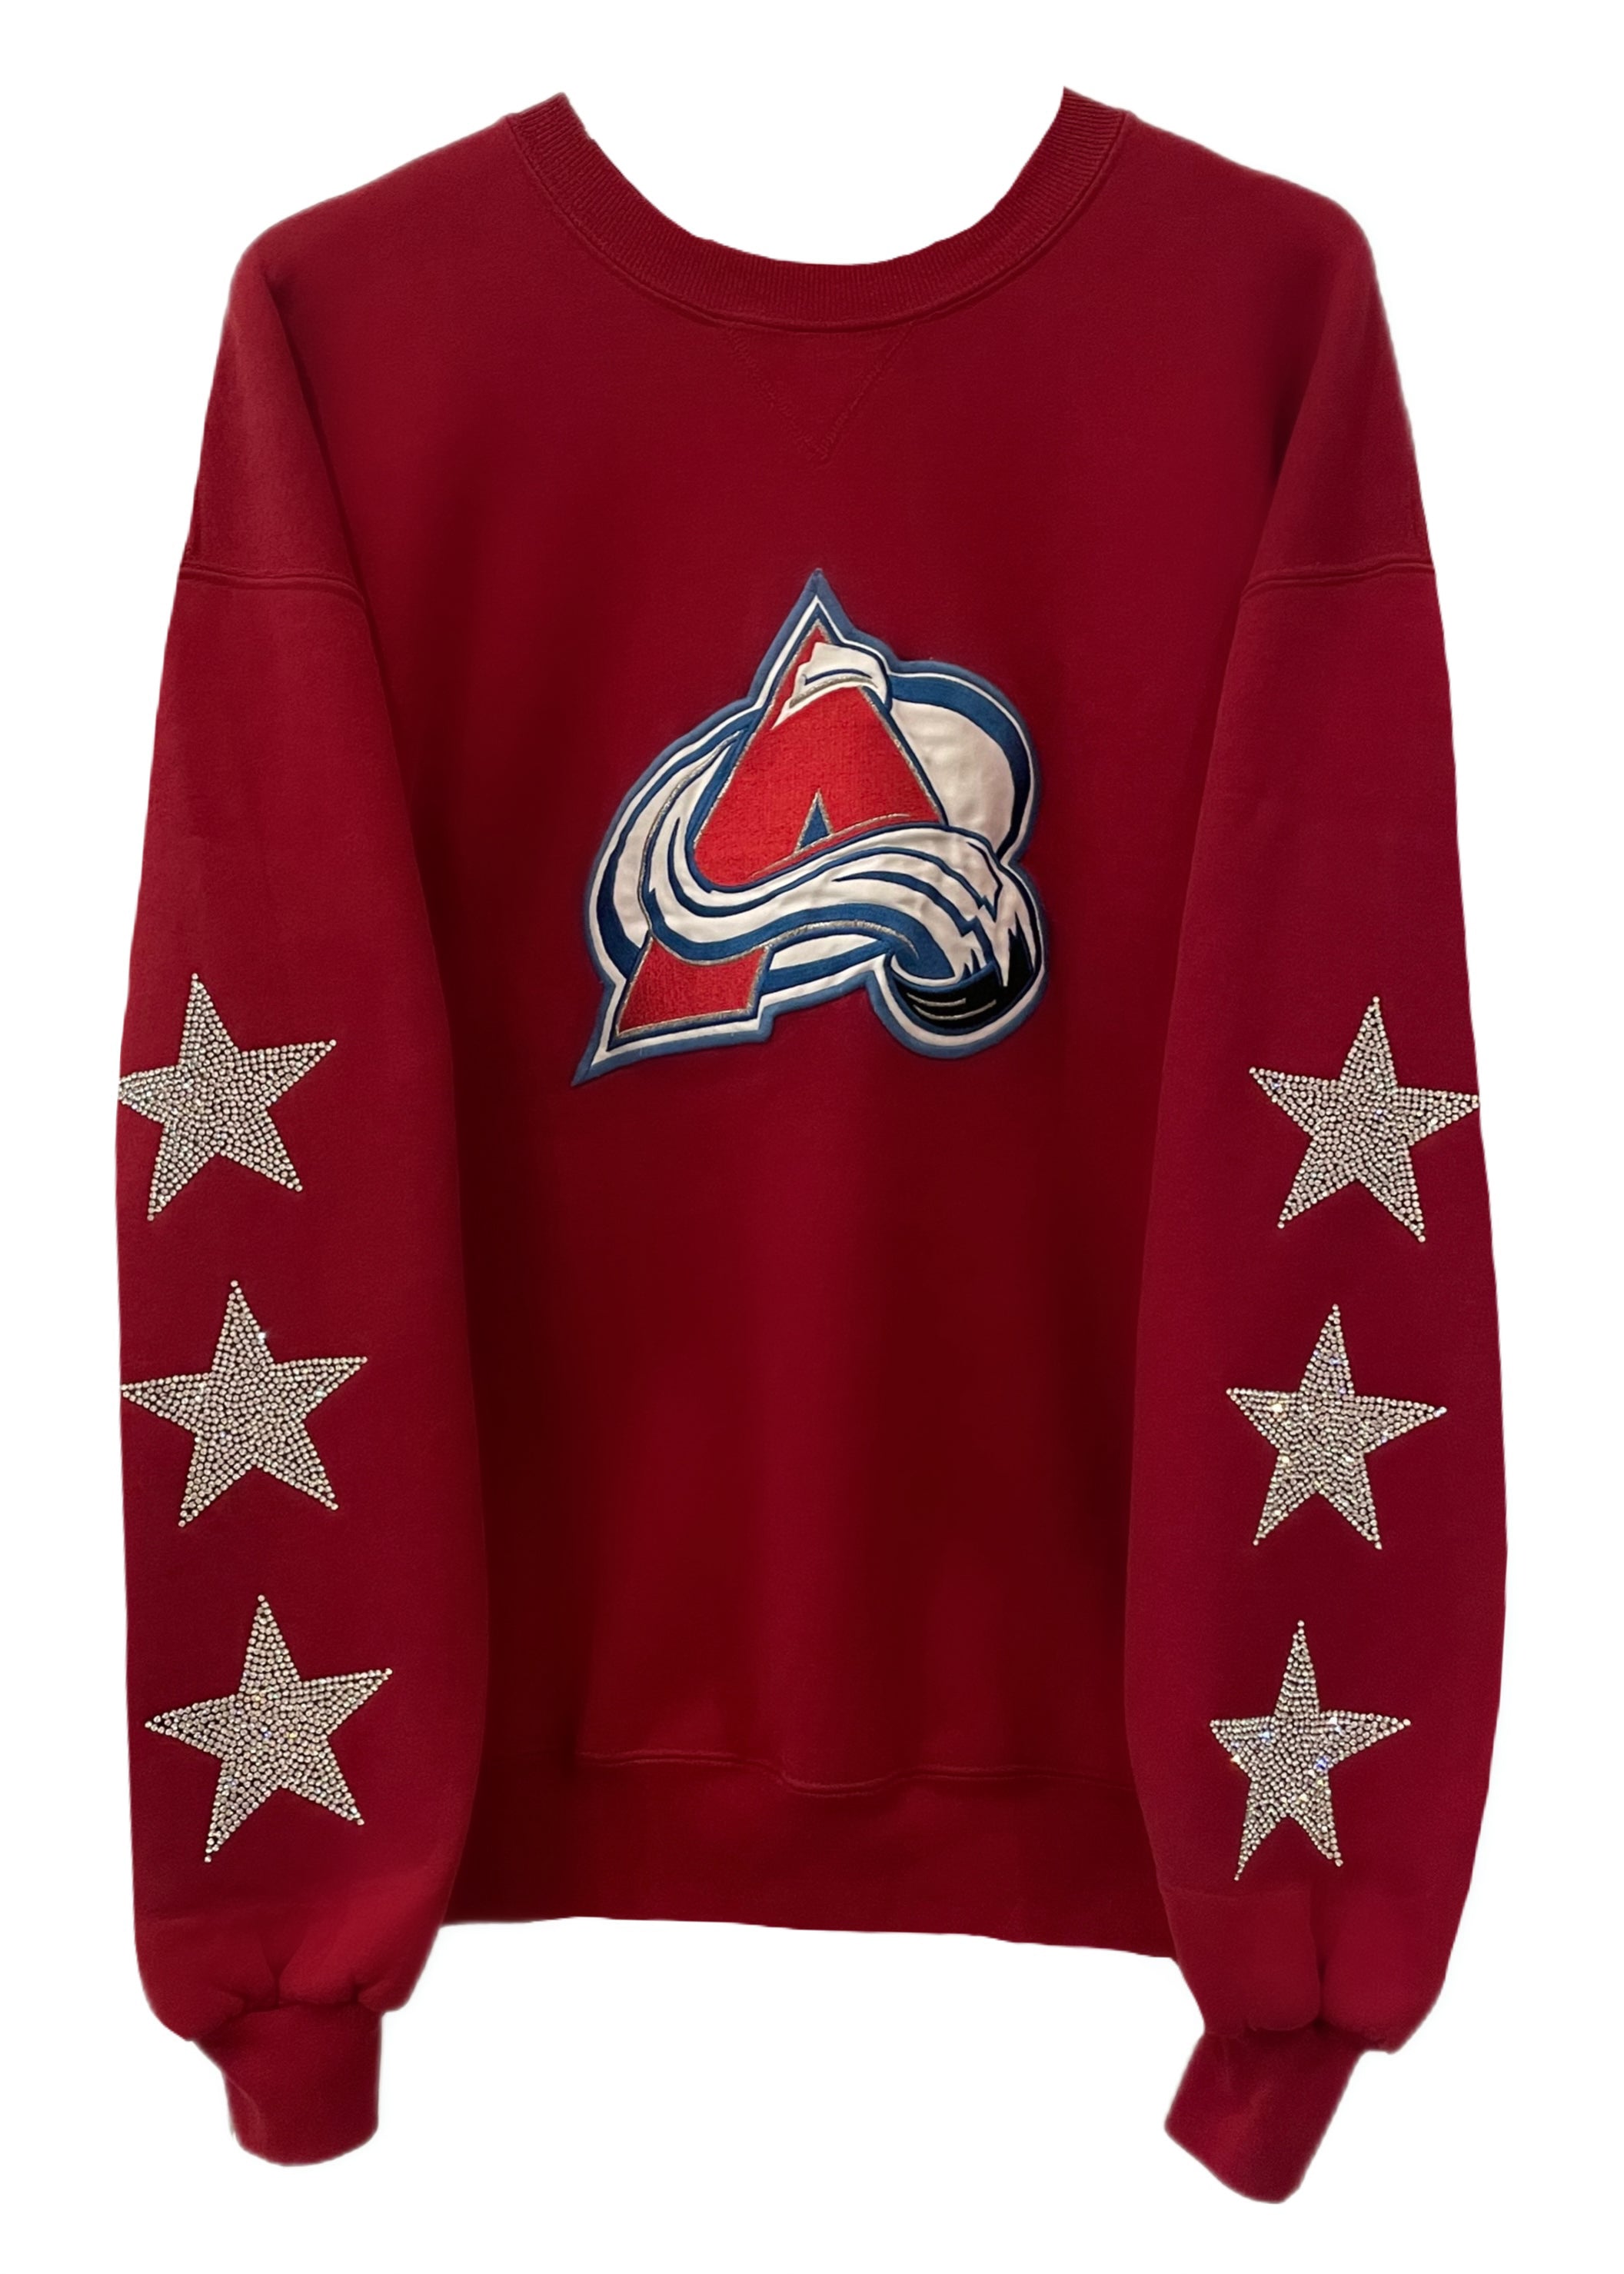 NY Islanders, NHL One of a KIND Vintage Sweatshirt with Three Crystal Star  Design